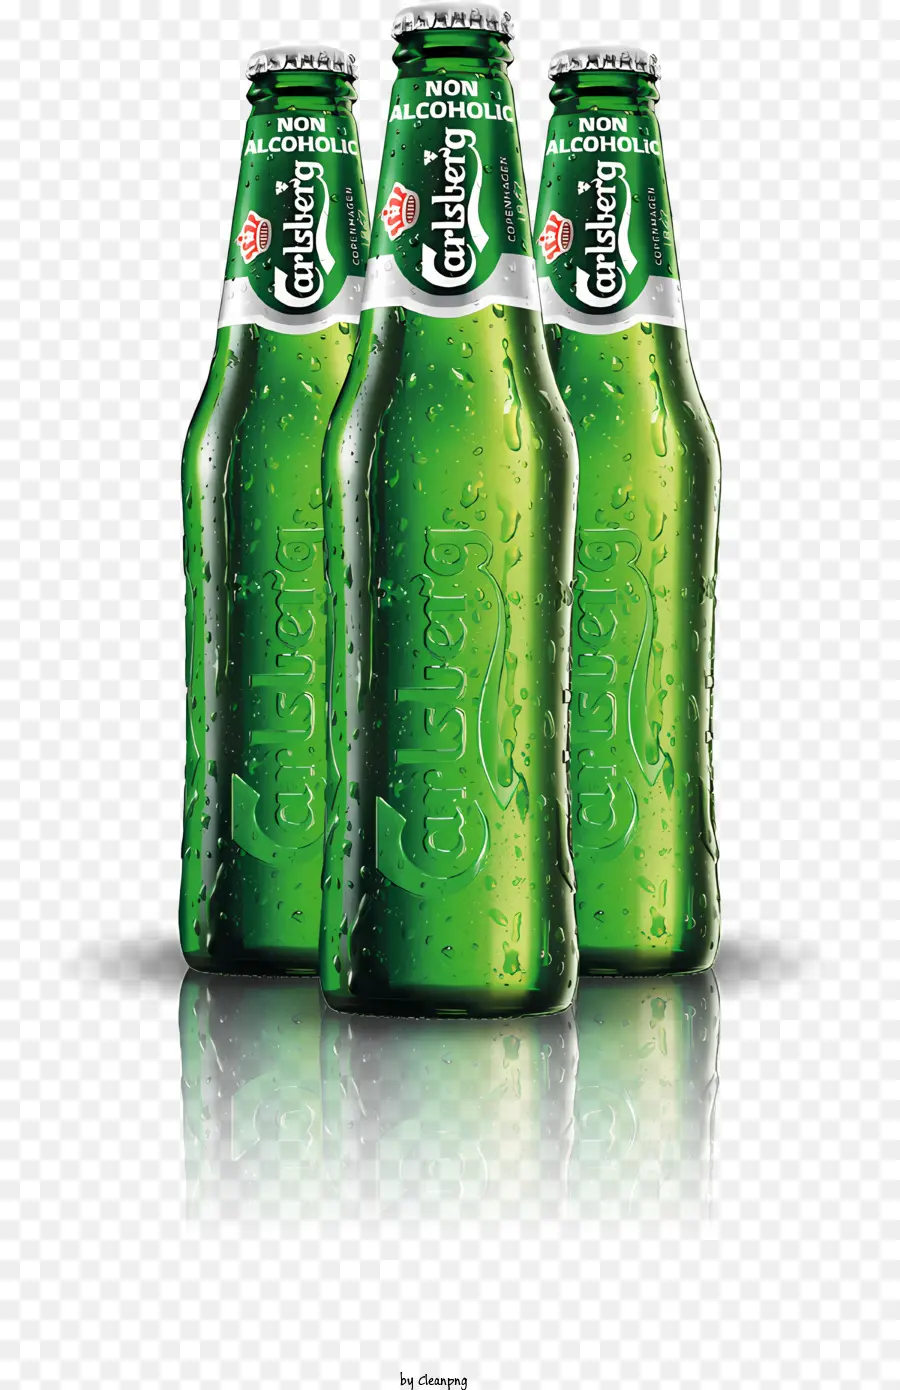 bottiglie di birra alla birra verde birra bottiglie di vetro - Tre bottiglie di birra verde, una con schiuma